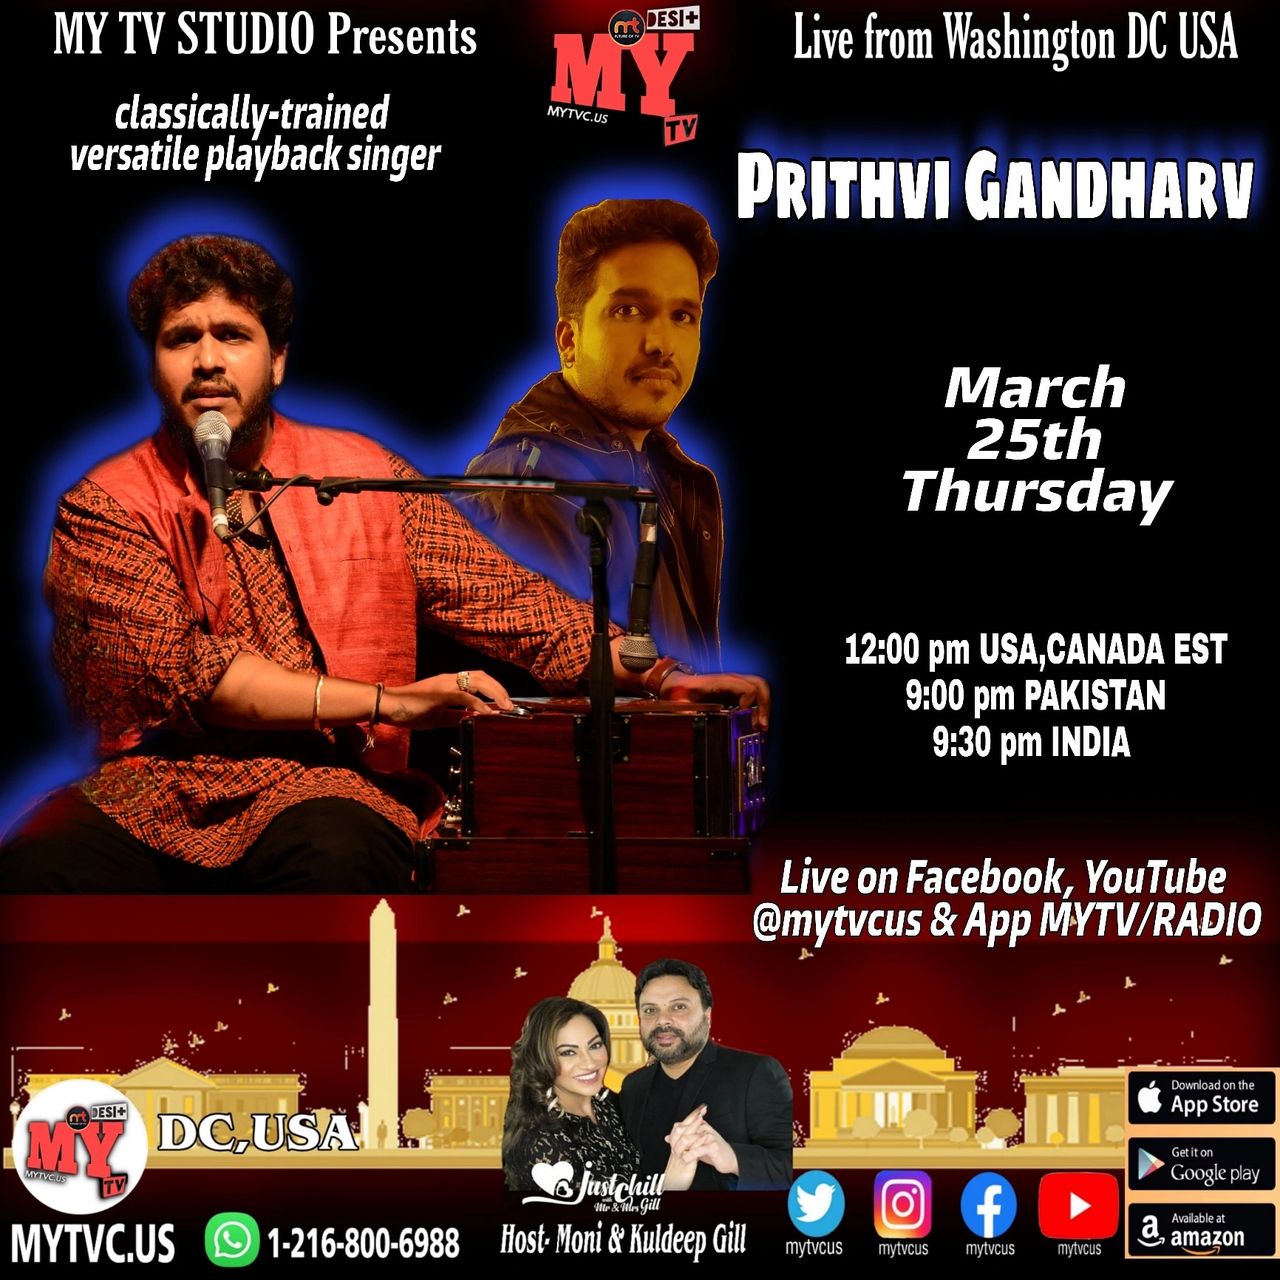 MYTV Presents Classical-trained versatile singer Prithvi Gandharv